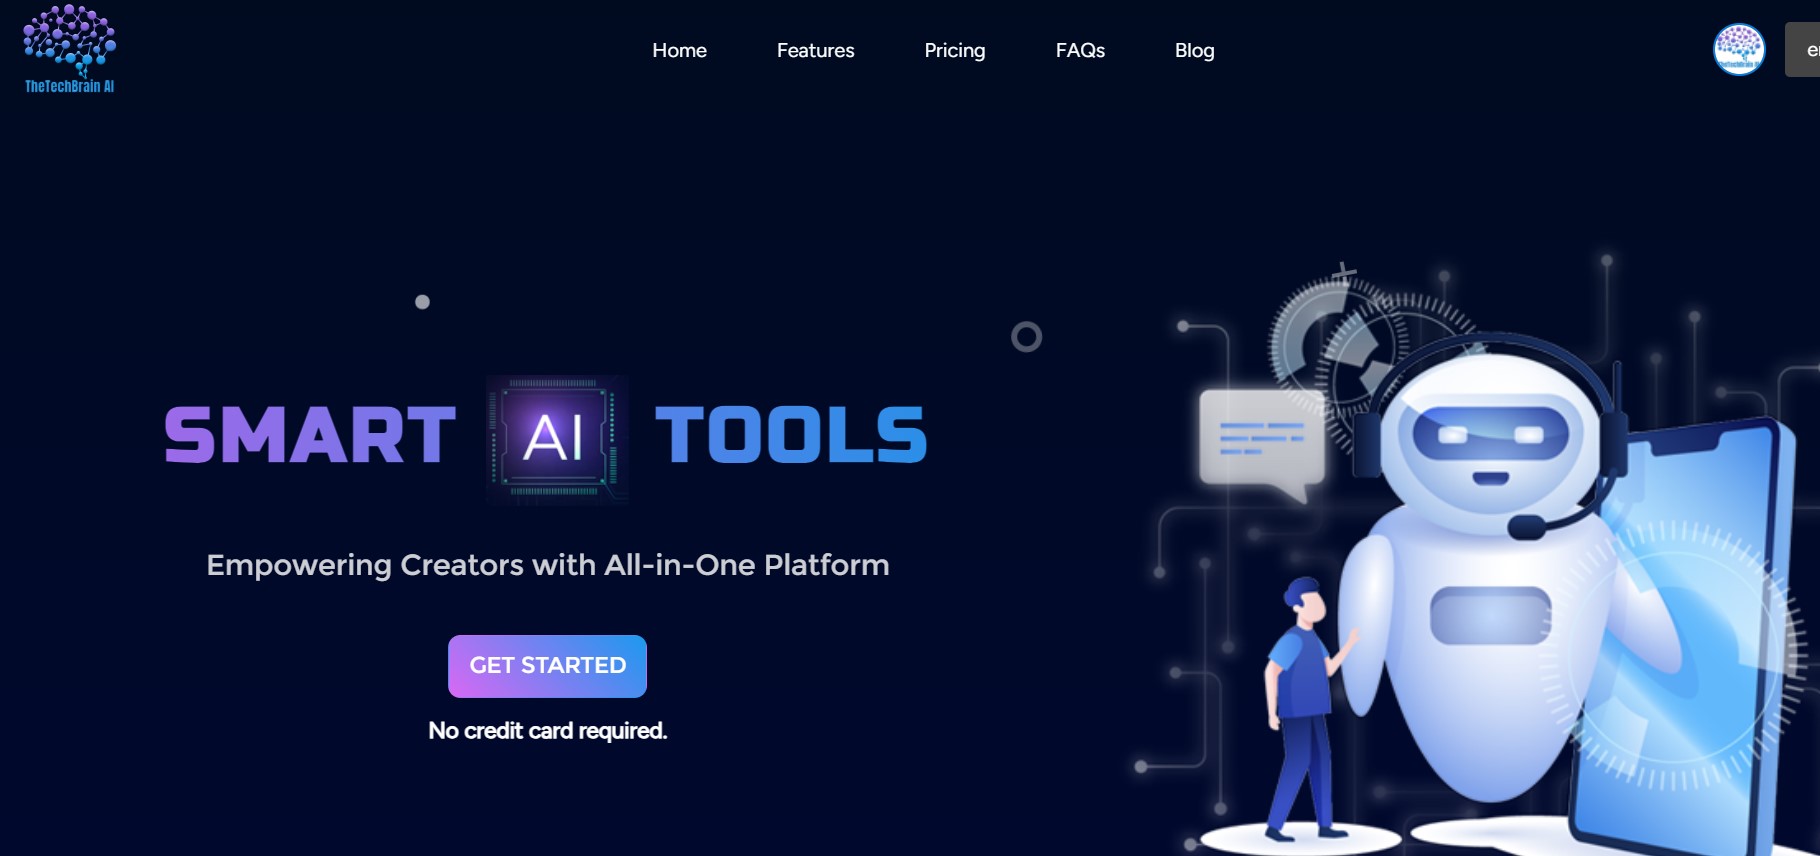 The TechBrain AI smart ai tools main homepage